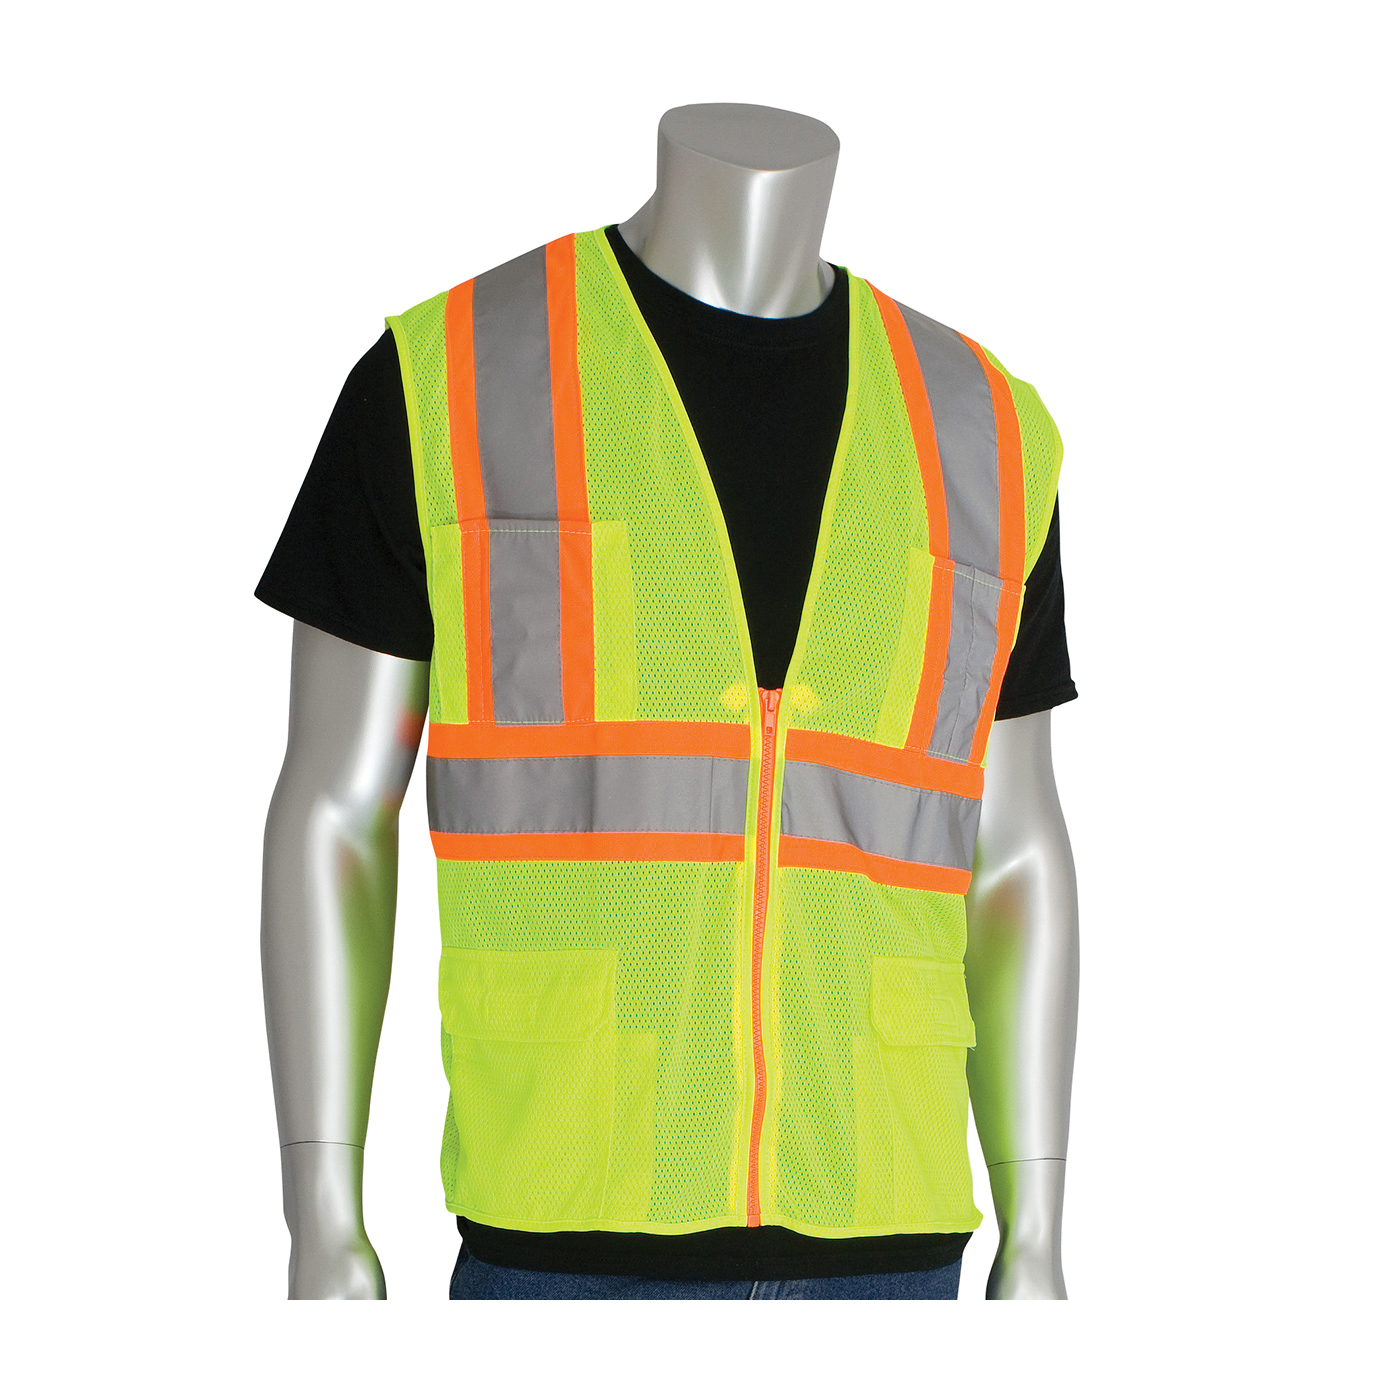 PIP® 302-MAPMLY-S 2-Tone Premium Surveyor Safety Vest, S, Hi-Viz Lime Yellow, Polyester, Zipper Closure, 11 Pockets, ANSI Class: Class 2, Specifications Met: ANSI 107 Type R